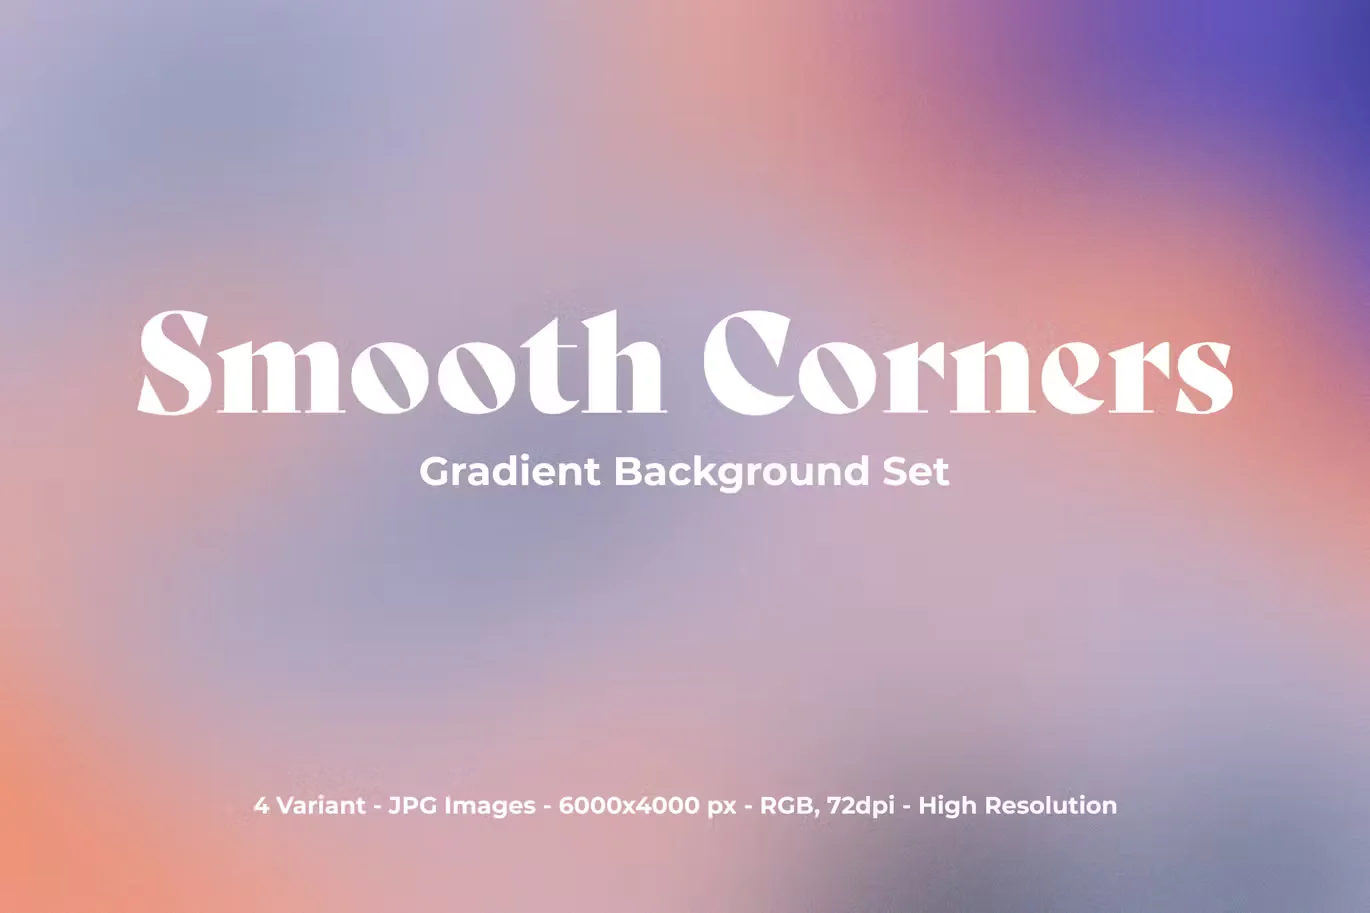 Smooth Corners Gradient Background